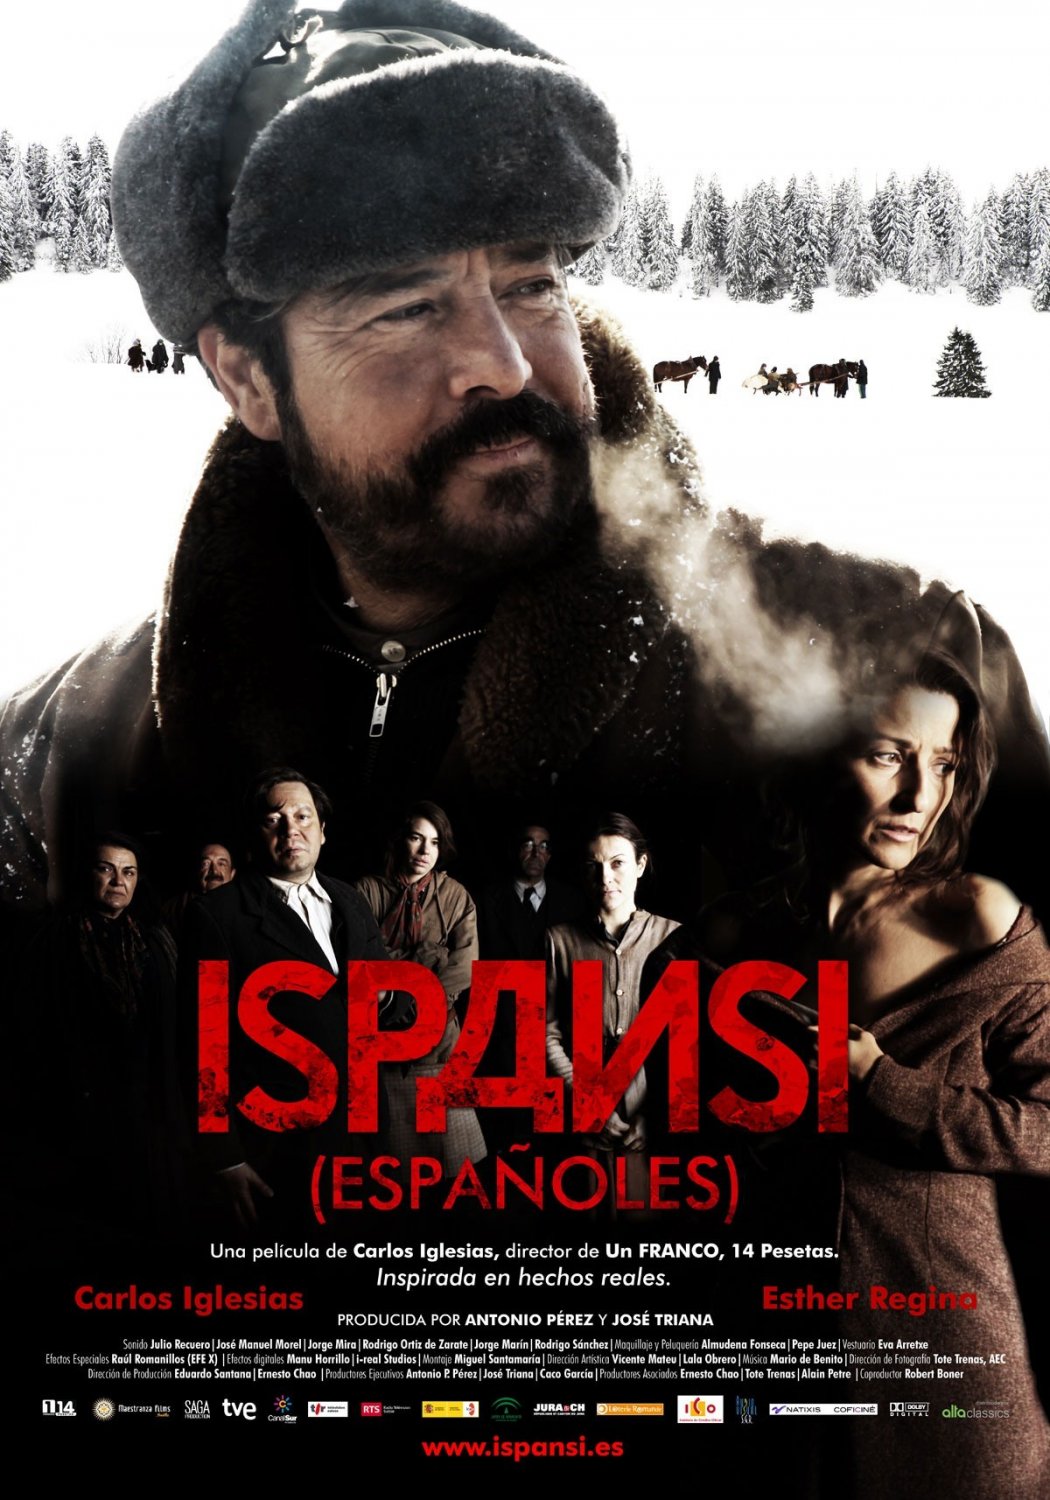 Extra Large Movie Poster Image for Ispansi! (#1 of 2)